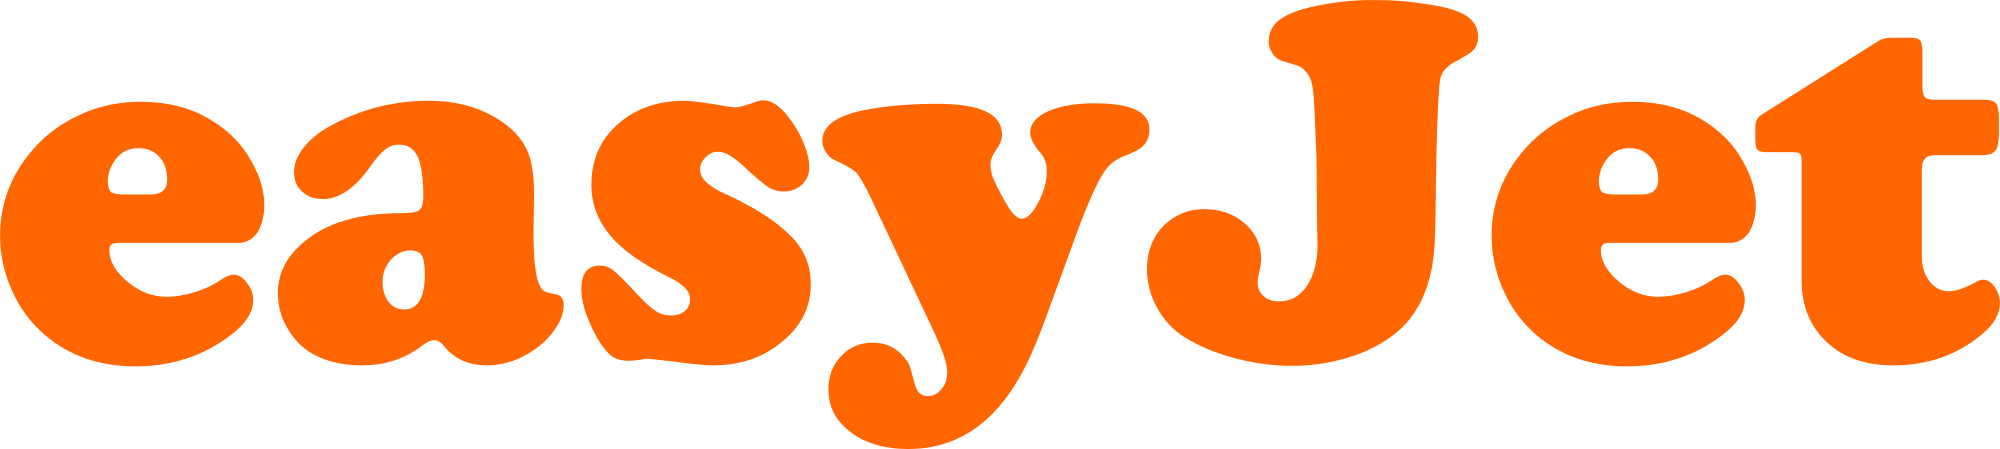 easyjet_logo-svg